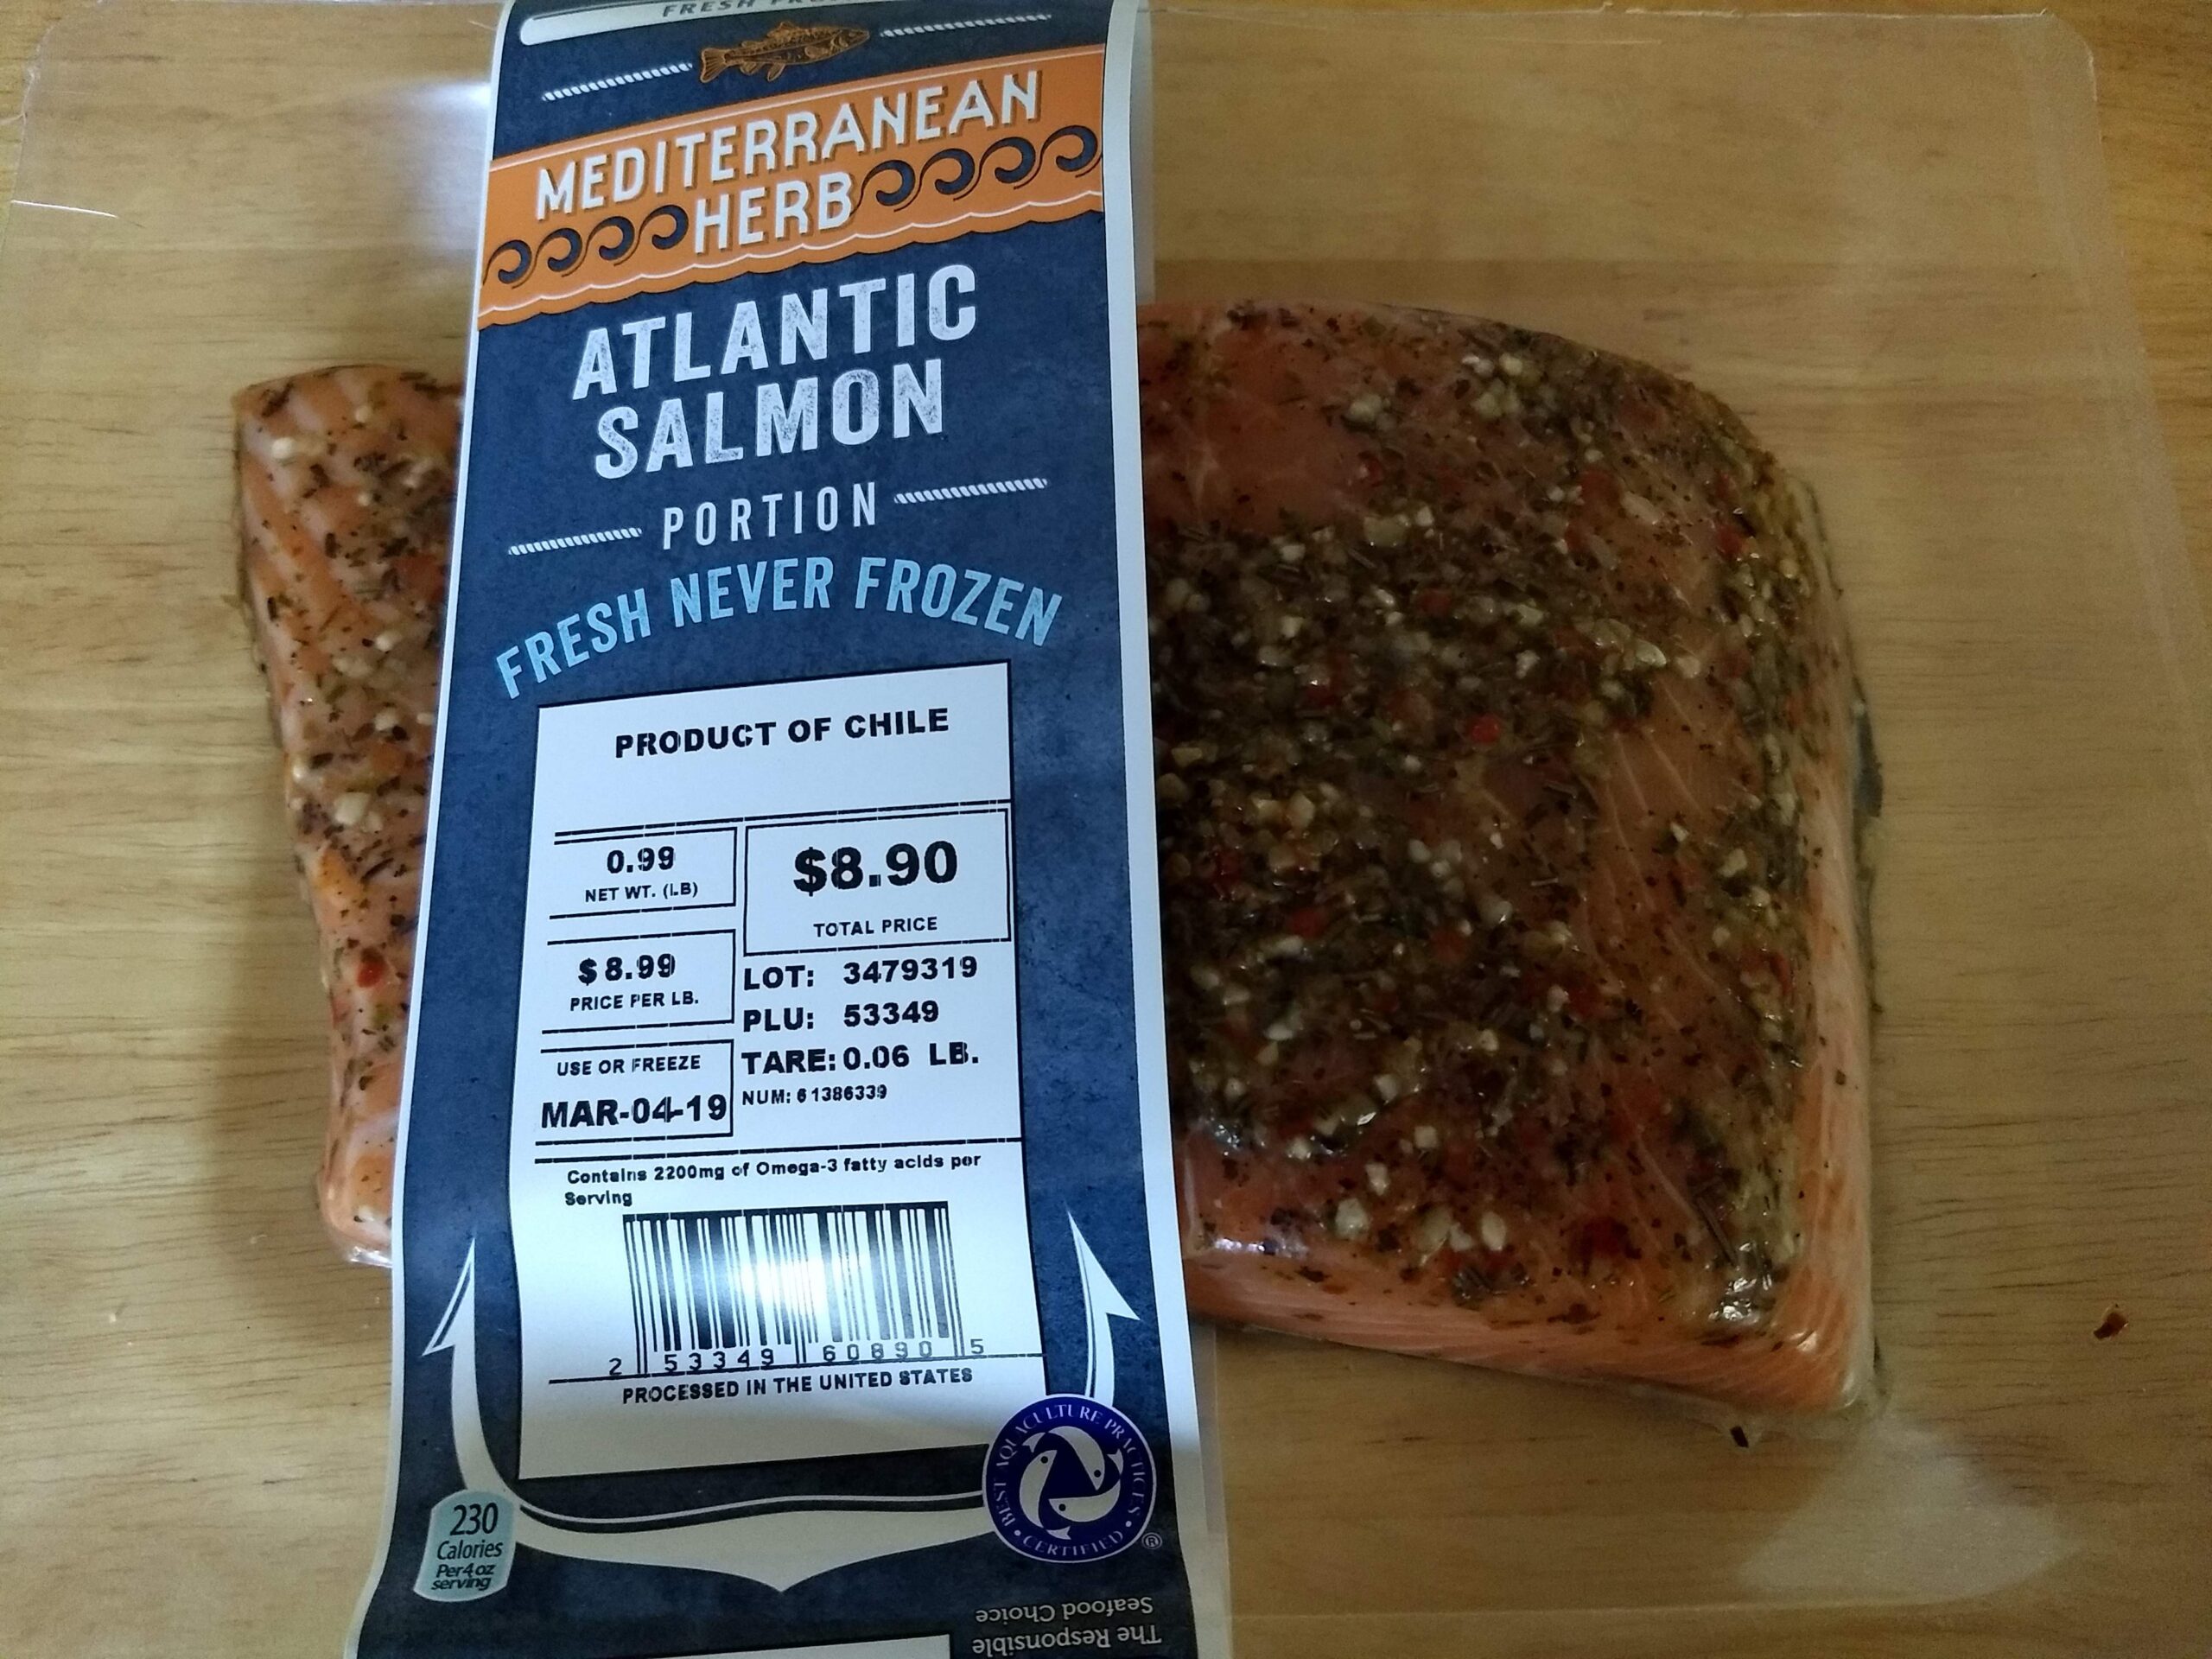 Fresh Atlantic Salmon with Mediterranean herb,